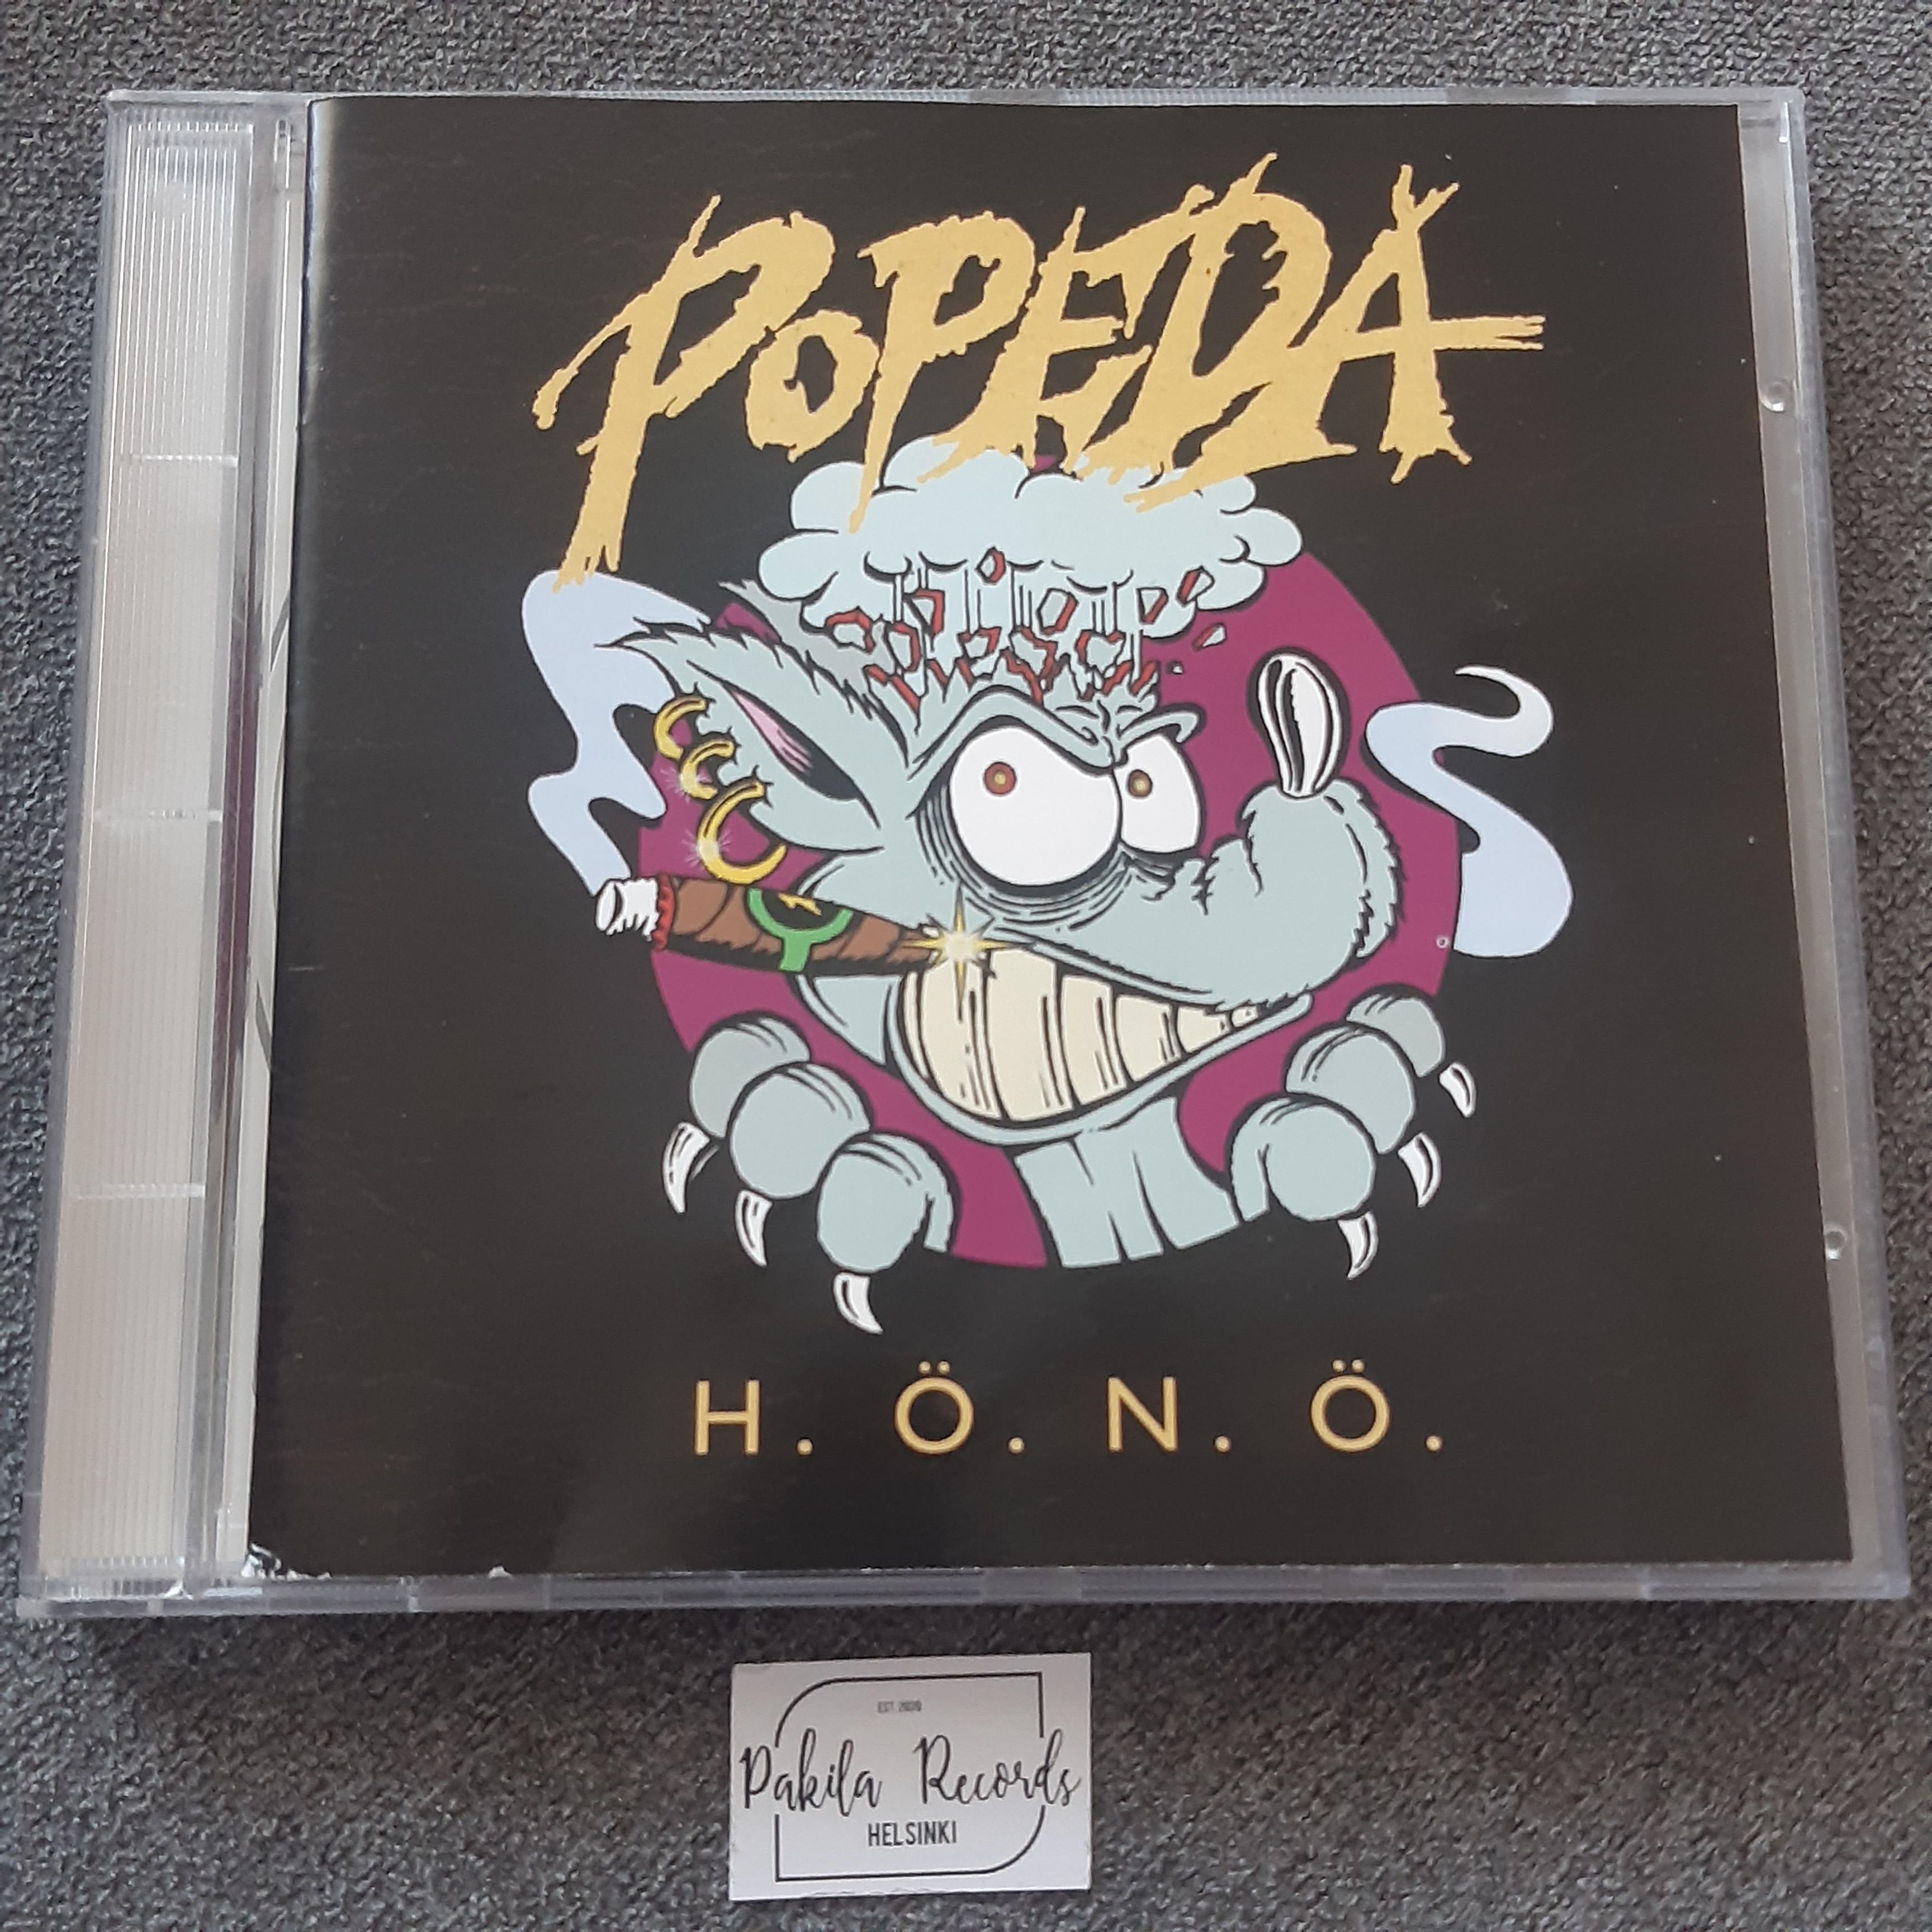 Popeda - H.Ö.N.Ö. - CD (käytetty)